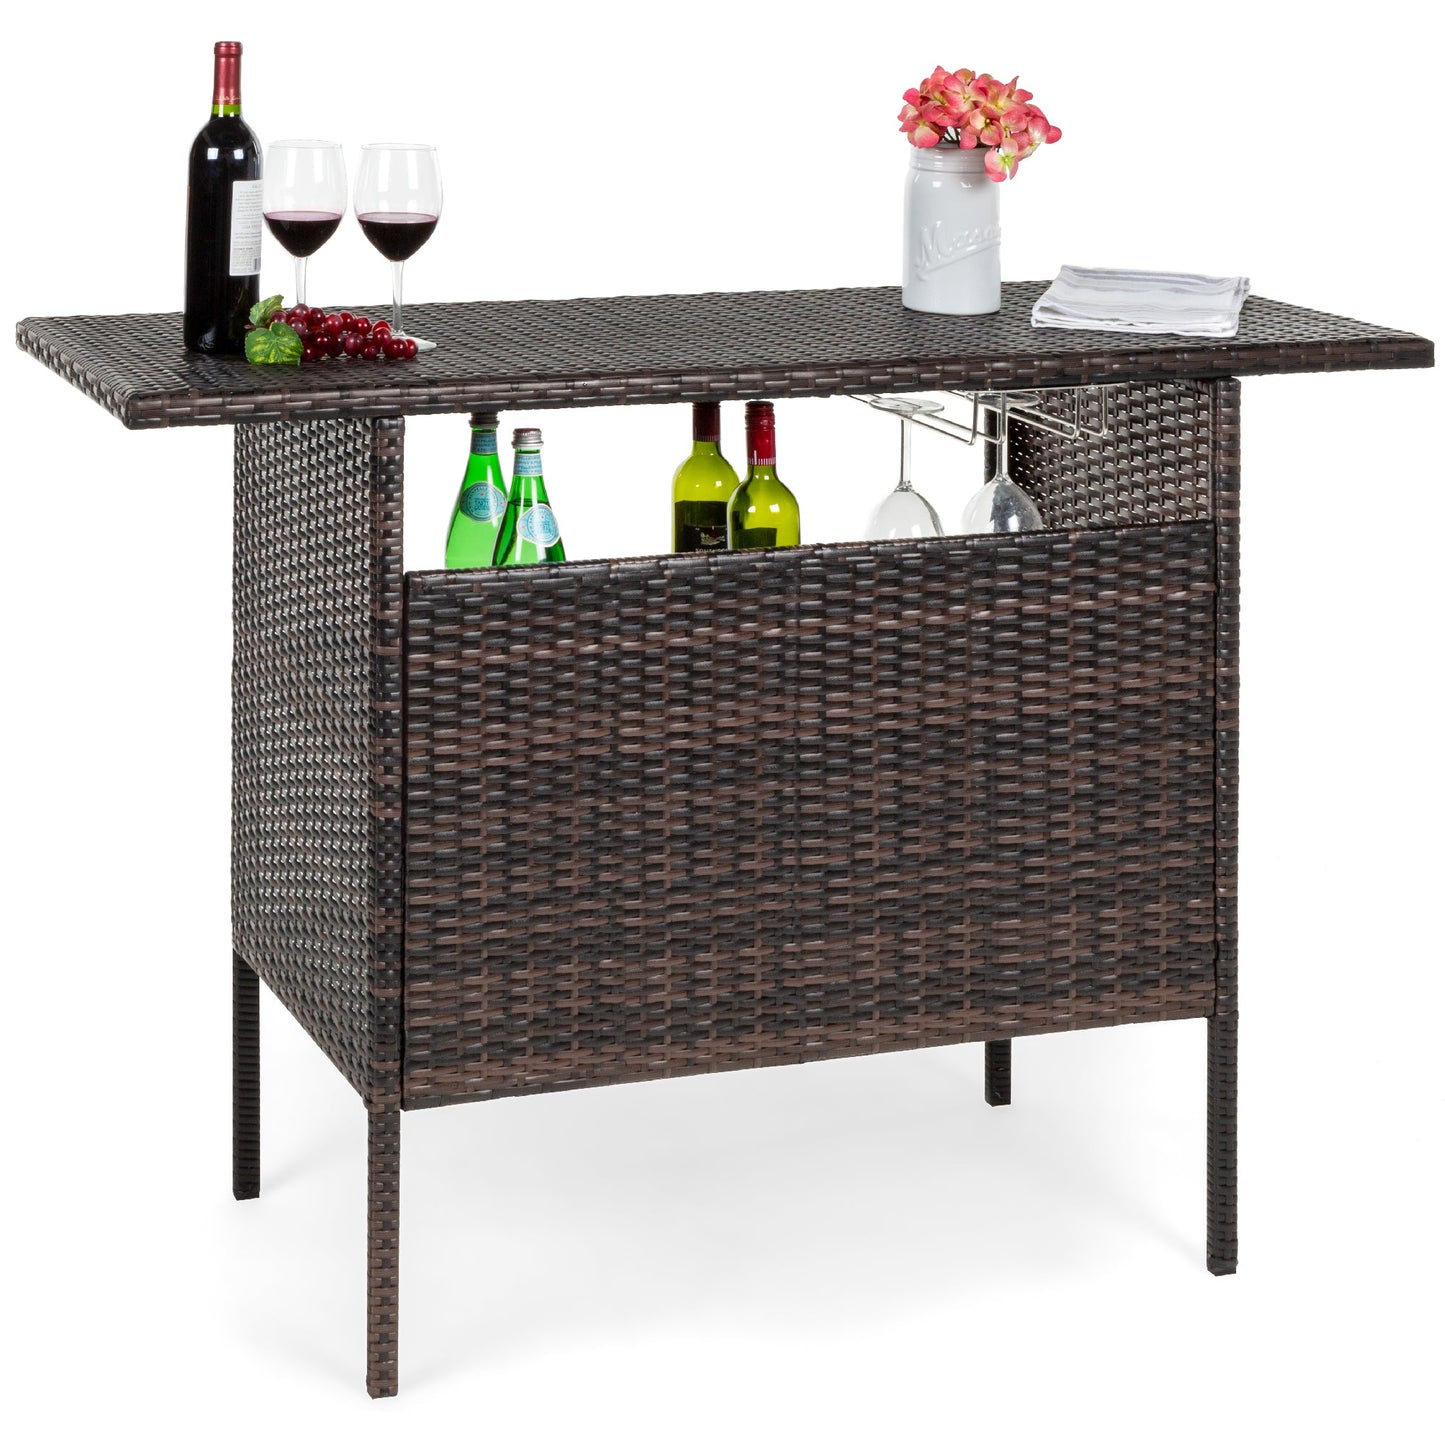 Outdoor Wicker Bar Counter Table w/ 2 Steel Shelves, 2 Rails